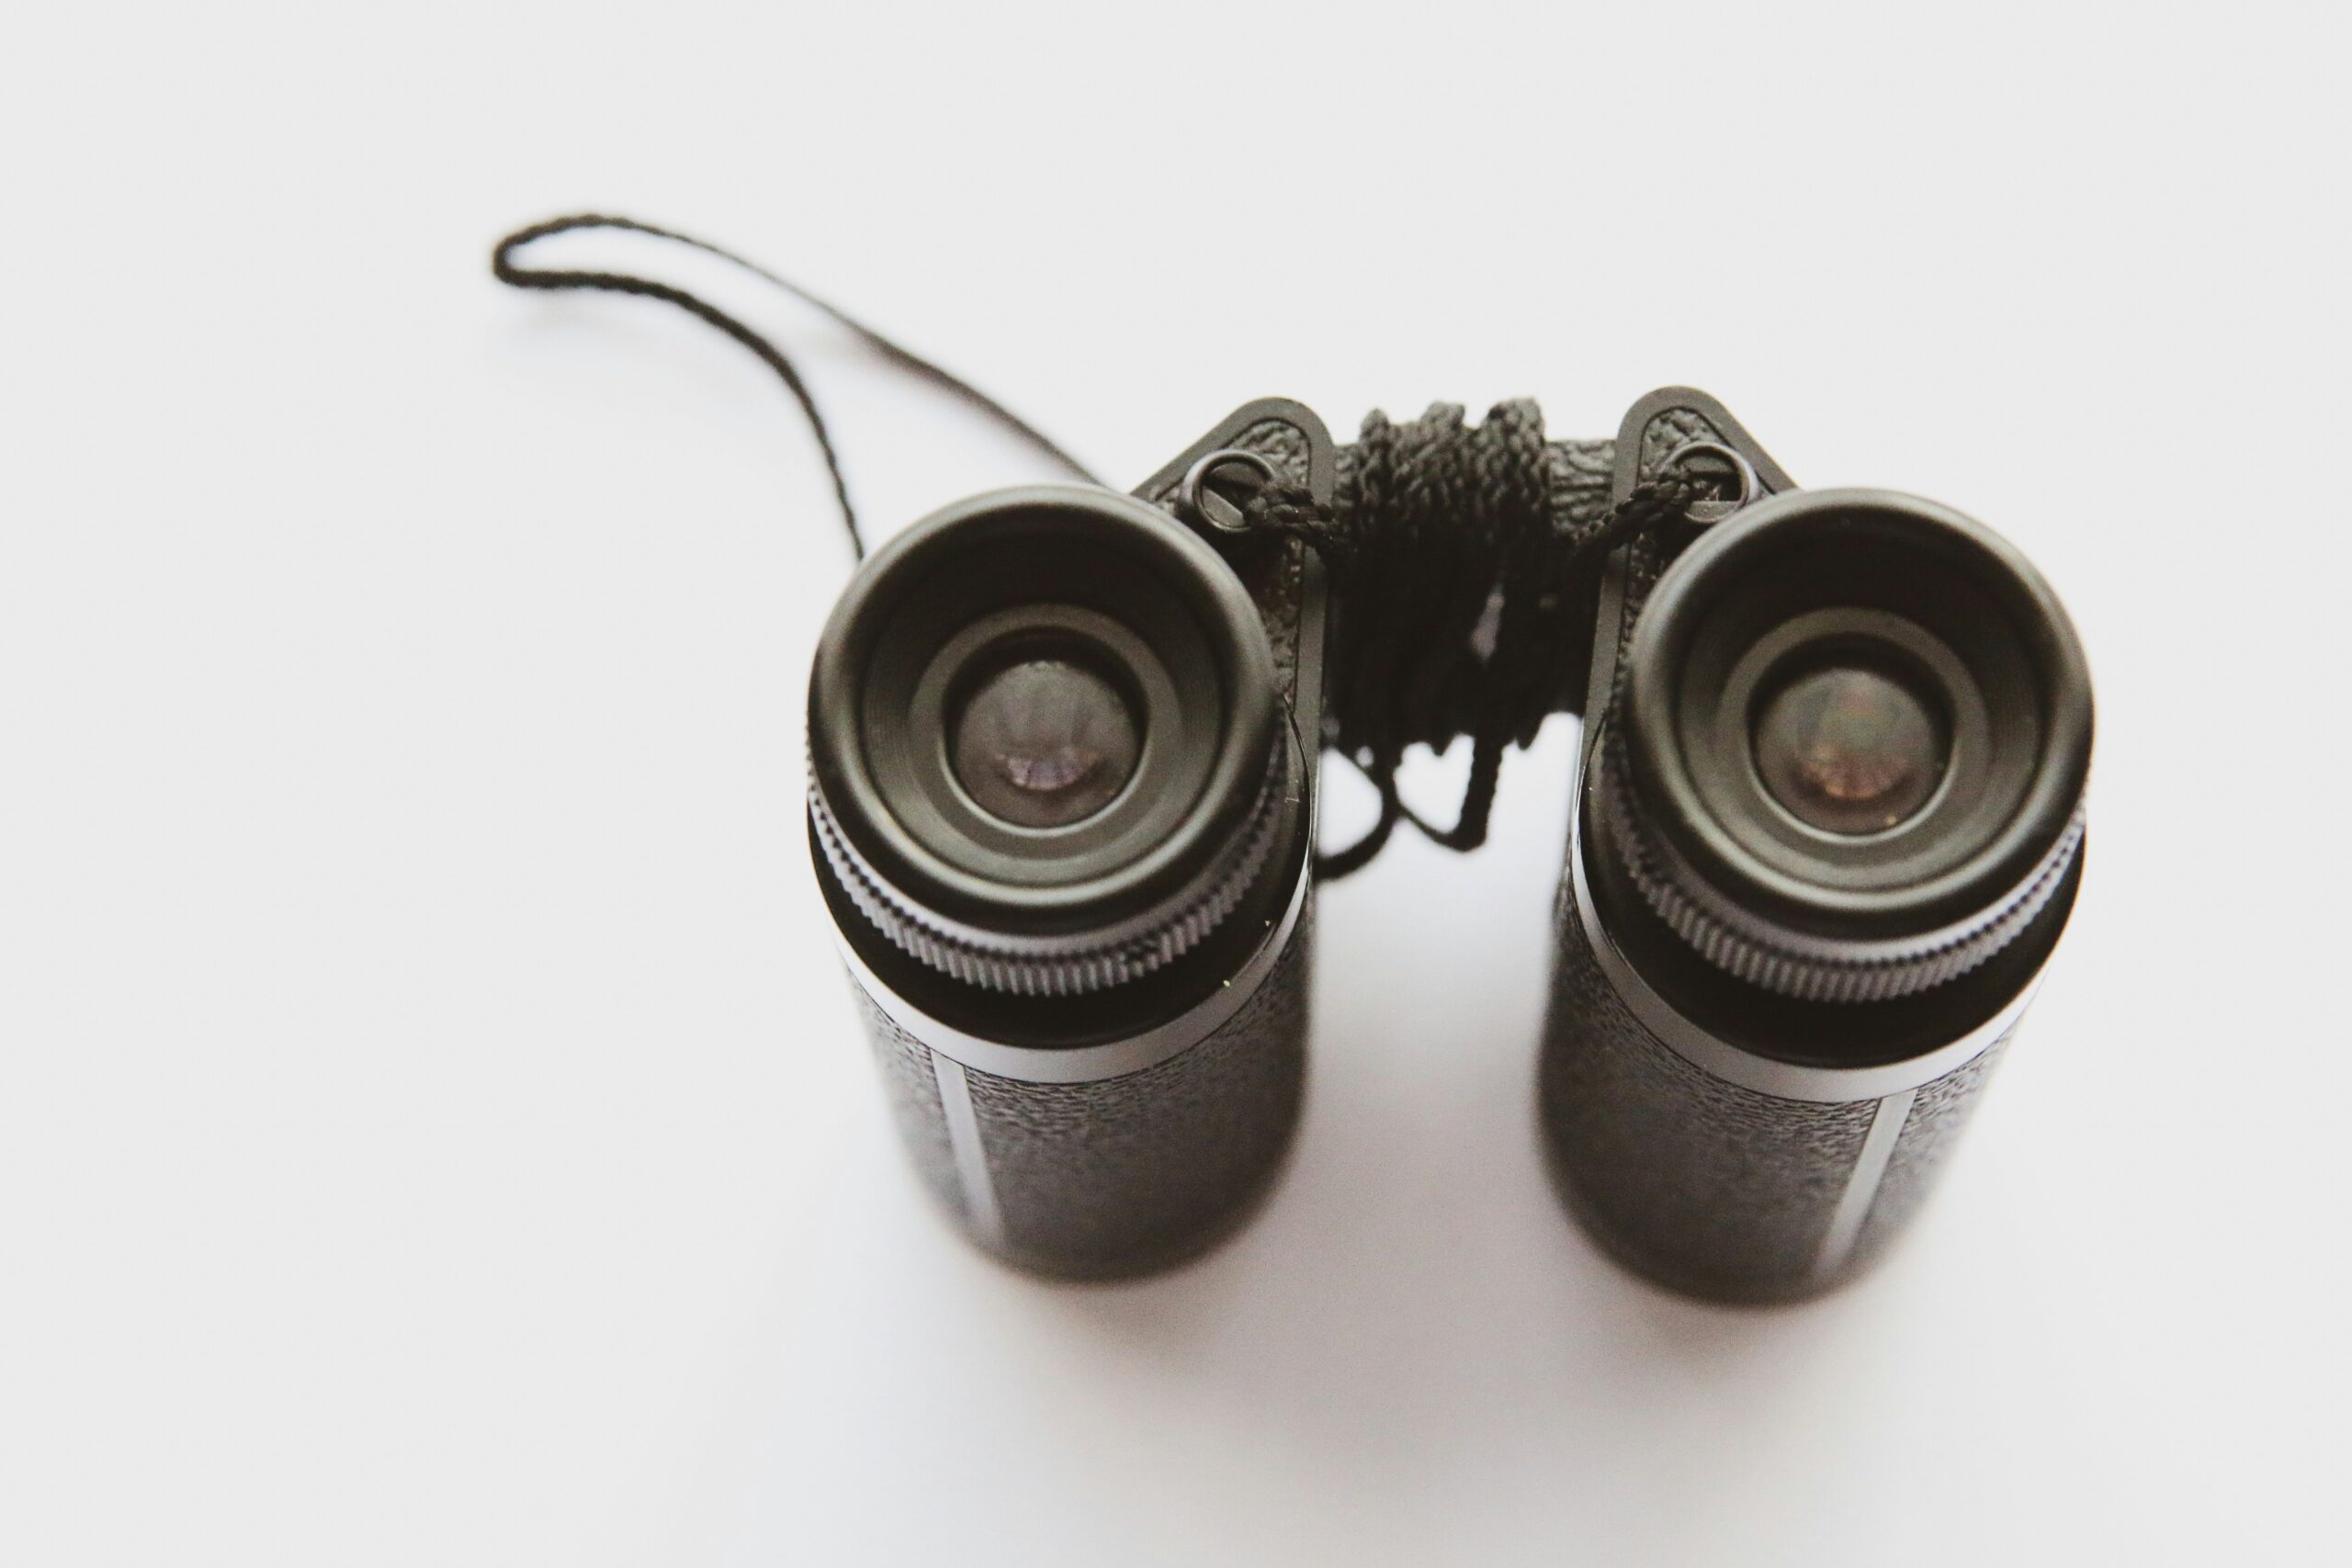 Are Image Stabilization Binoculars Worth It?